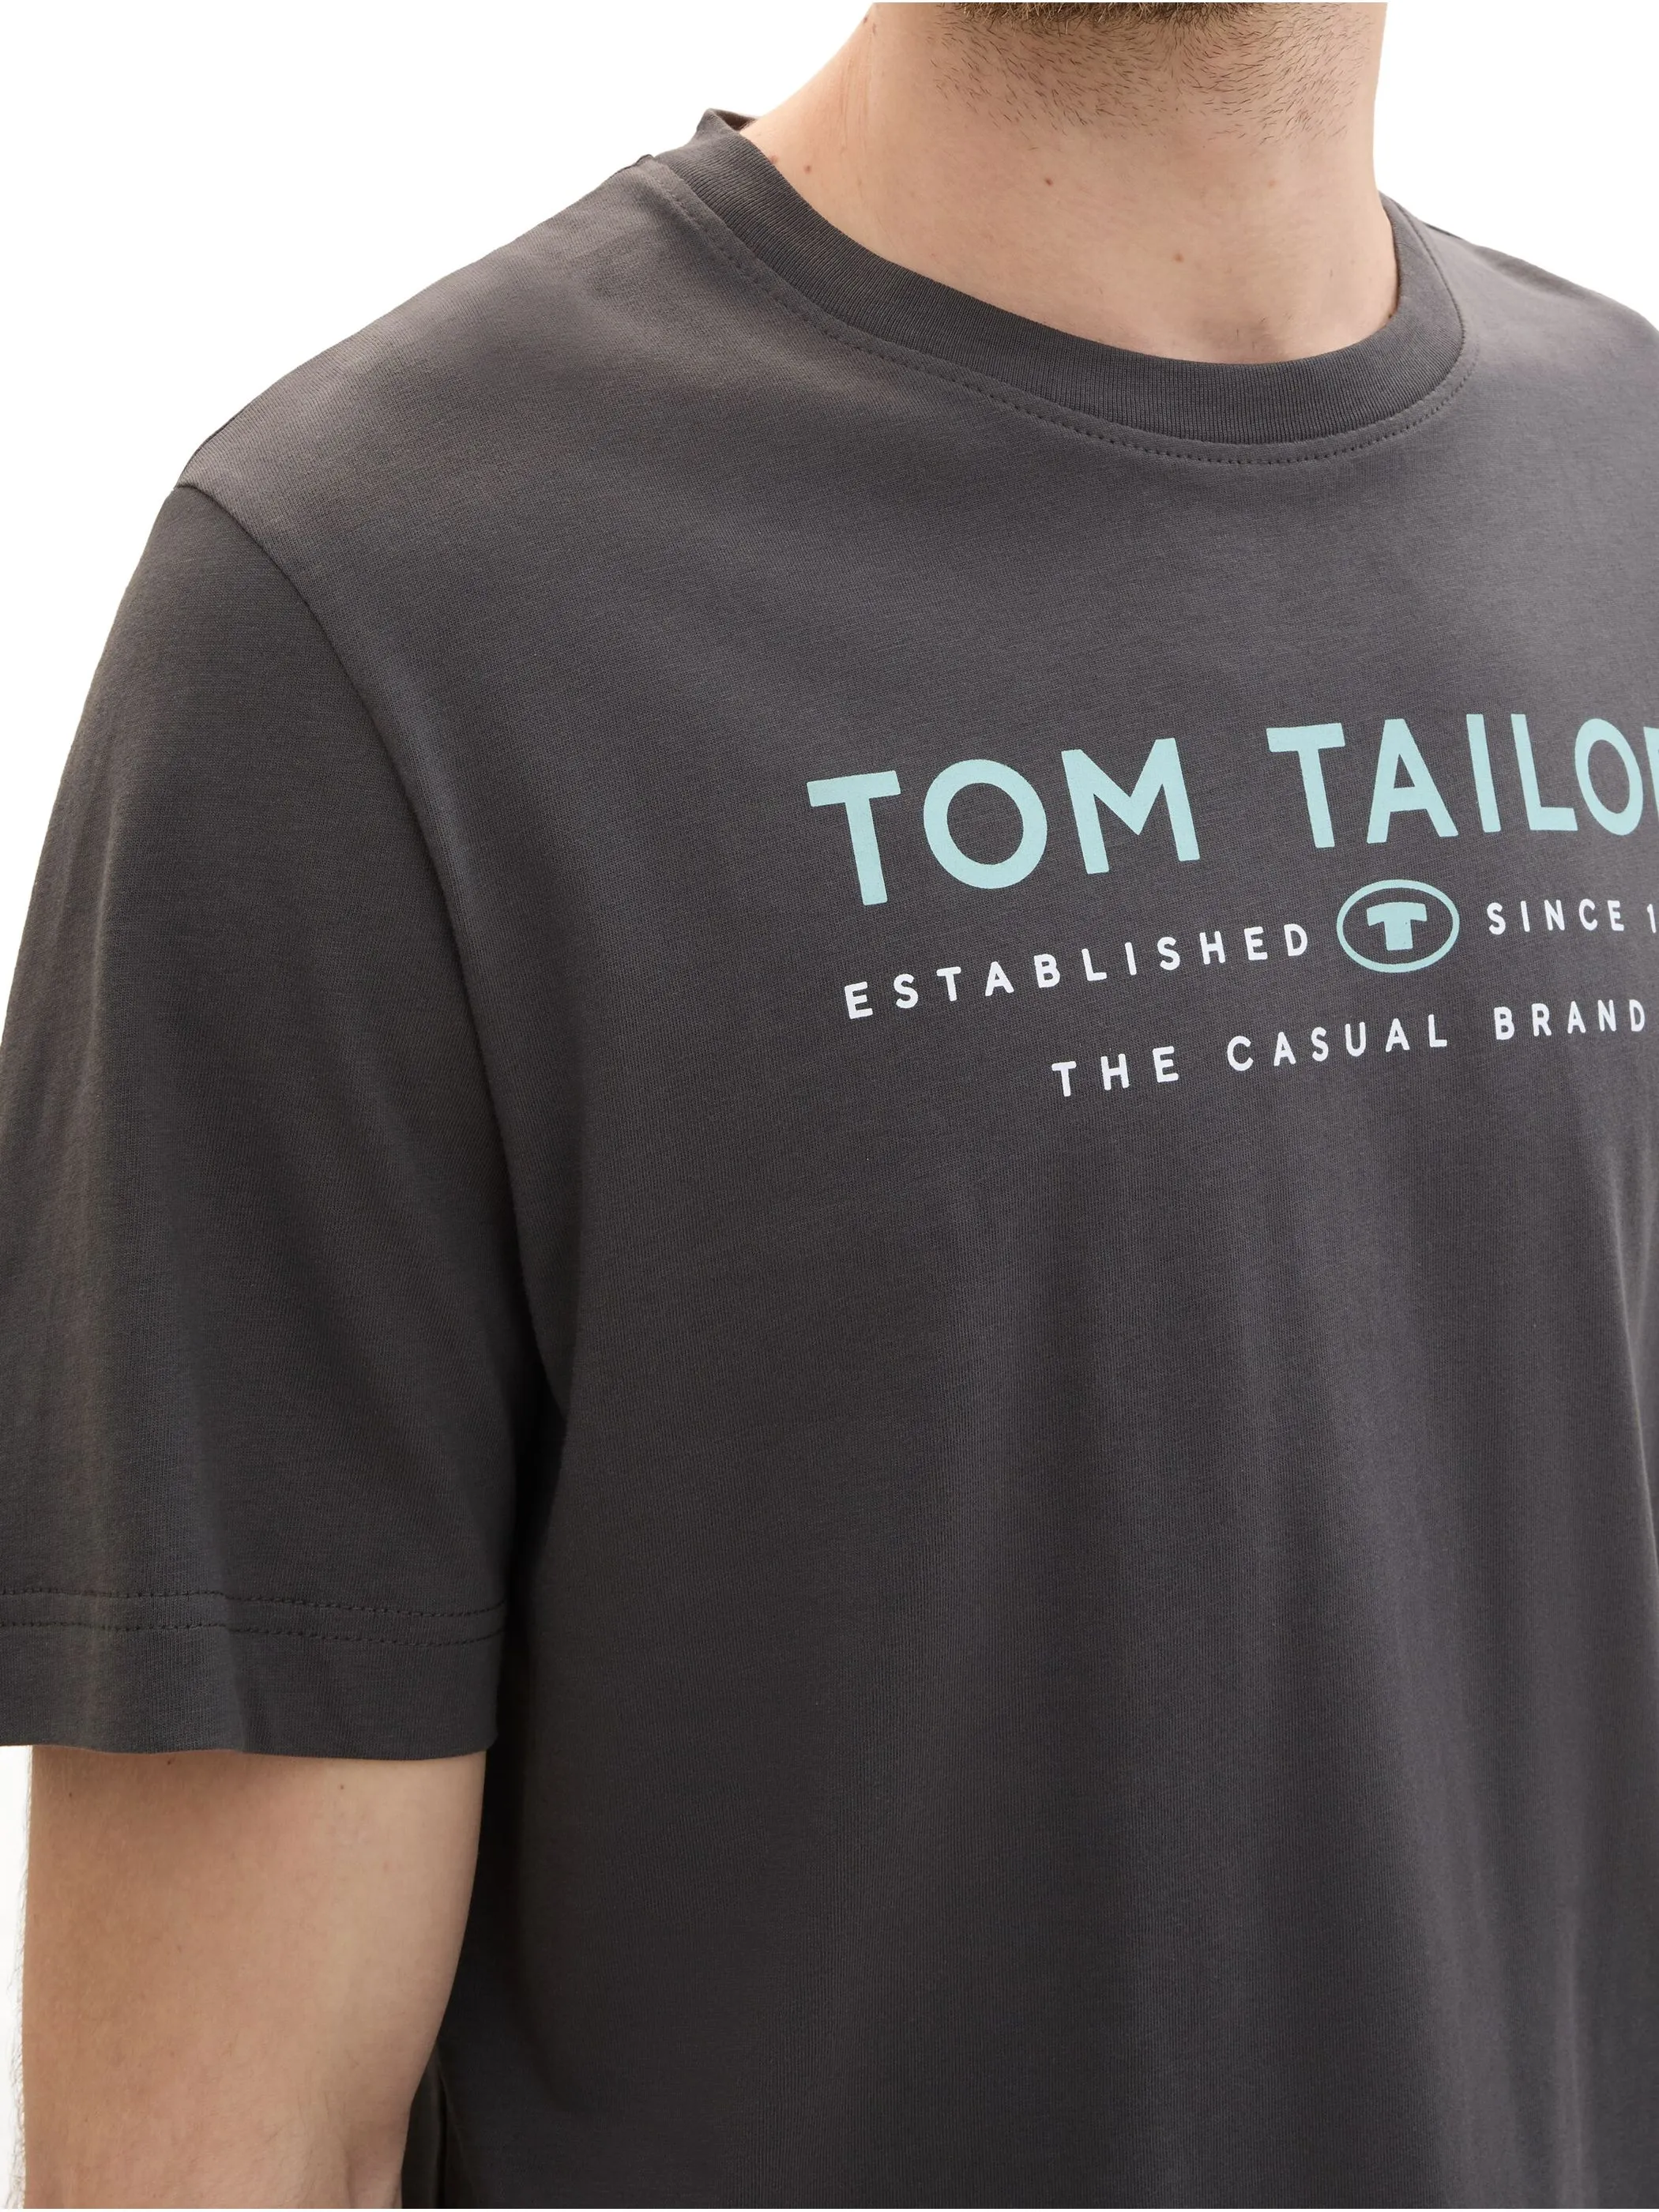 Tom Tailor 1043276 t-shirt with print Grau 898849 10899 3